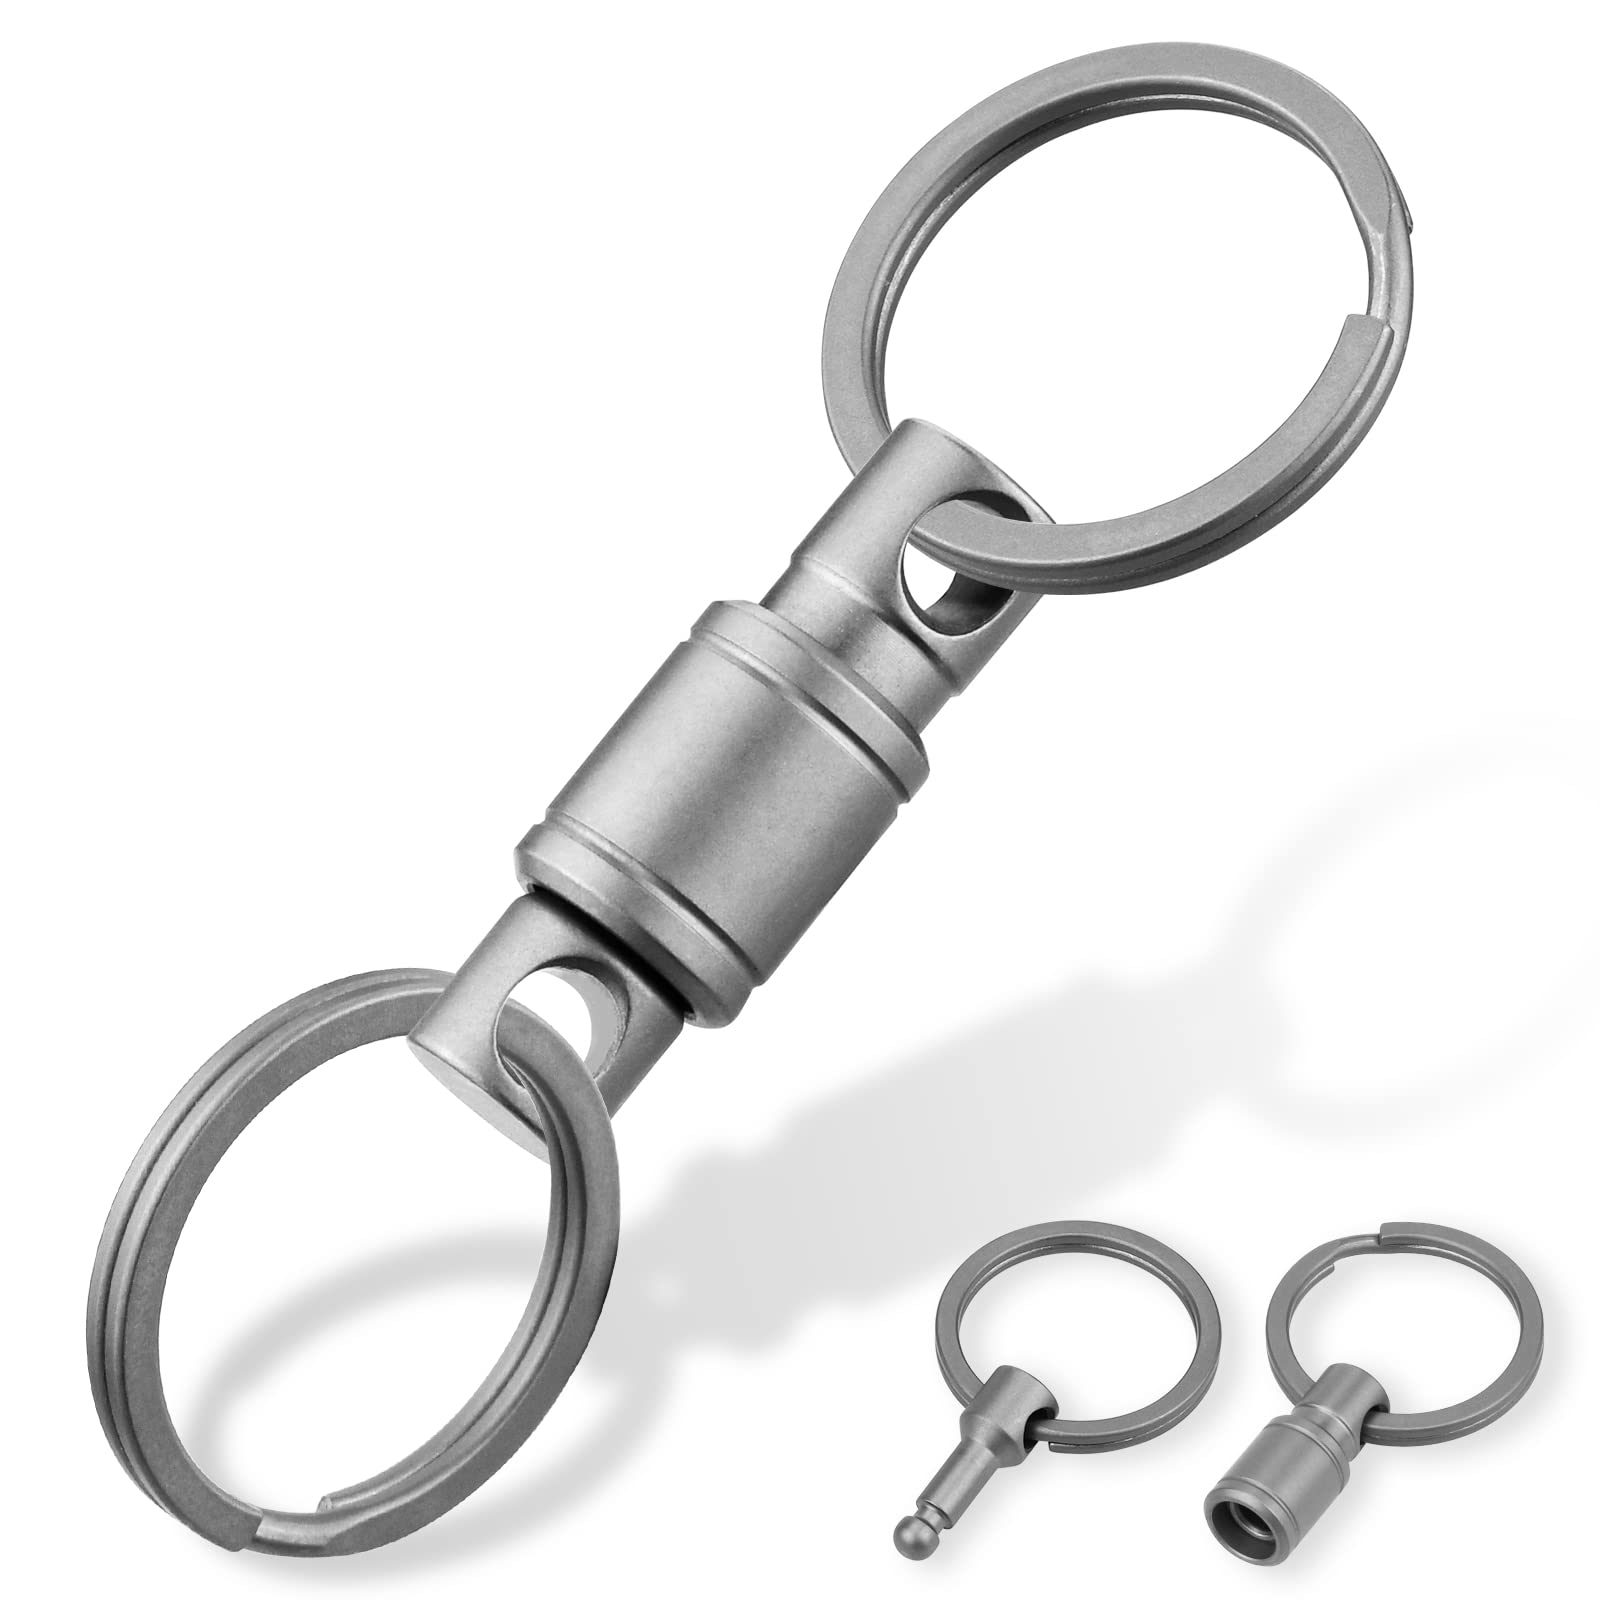 Titanium Quick Release Keychain, Upgraded Detachable Key Ring Key Holder  with 2 Key Rings UIInosoo Pull Apart Keys Easily